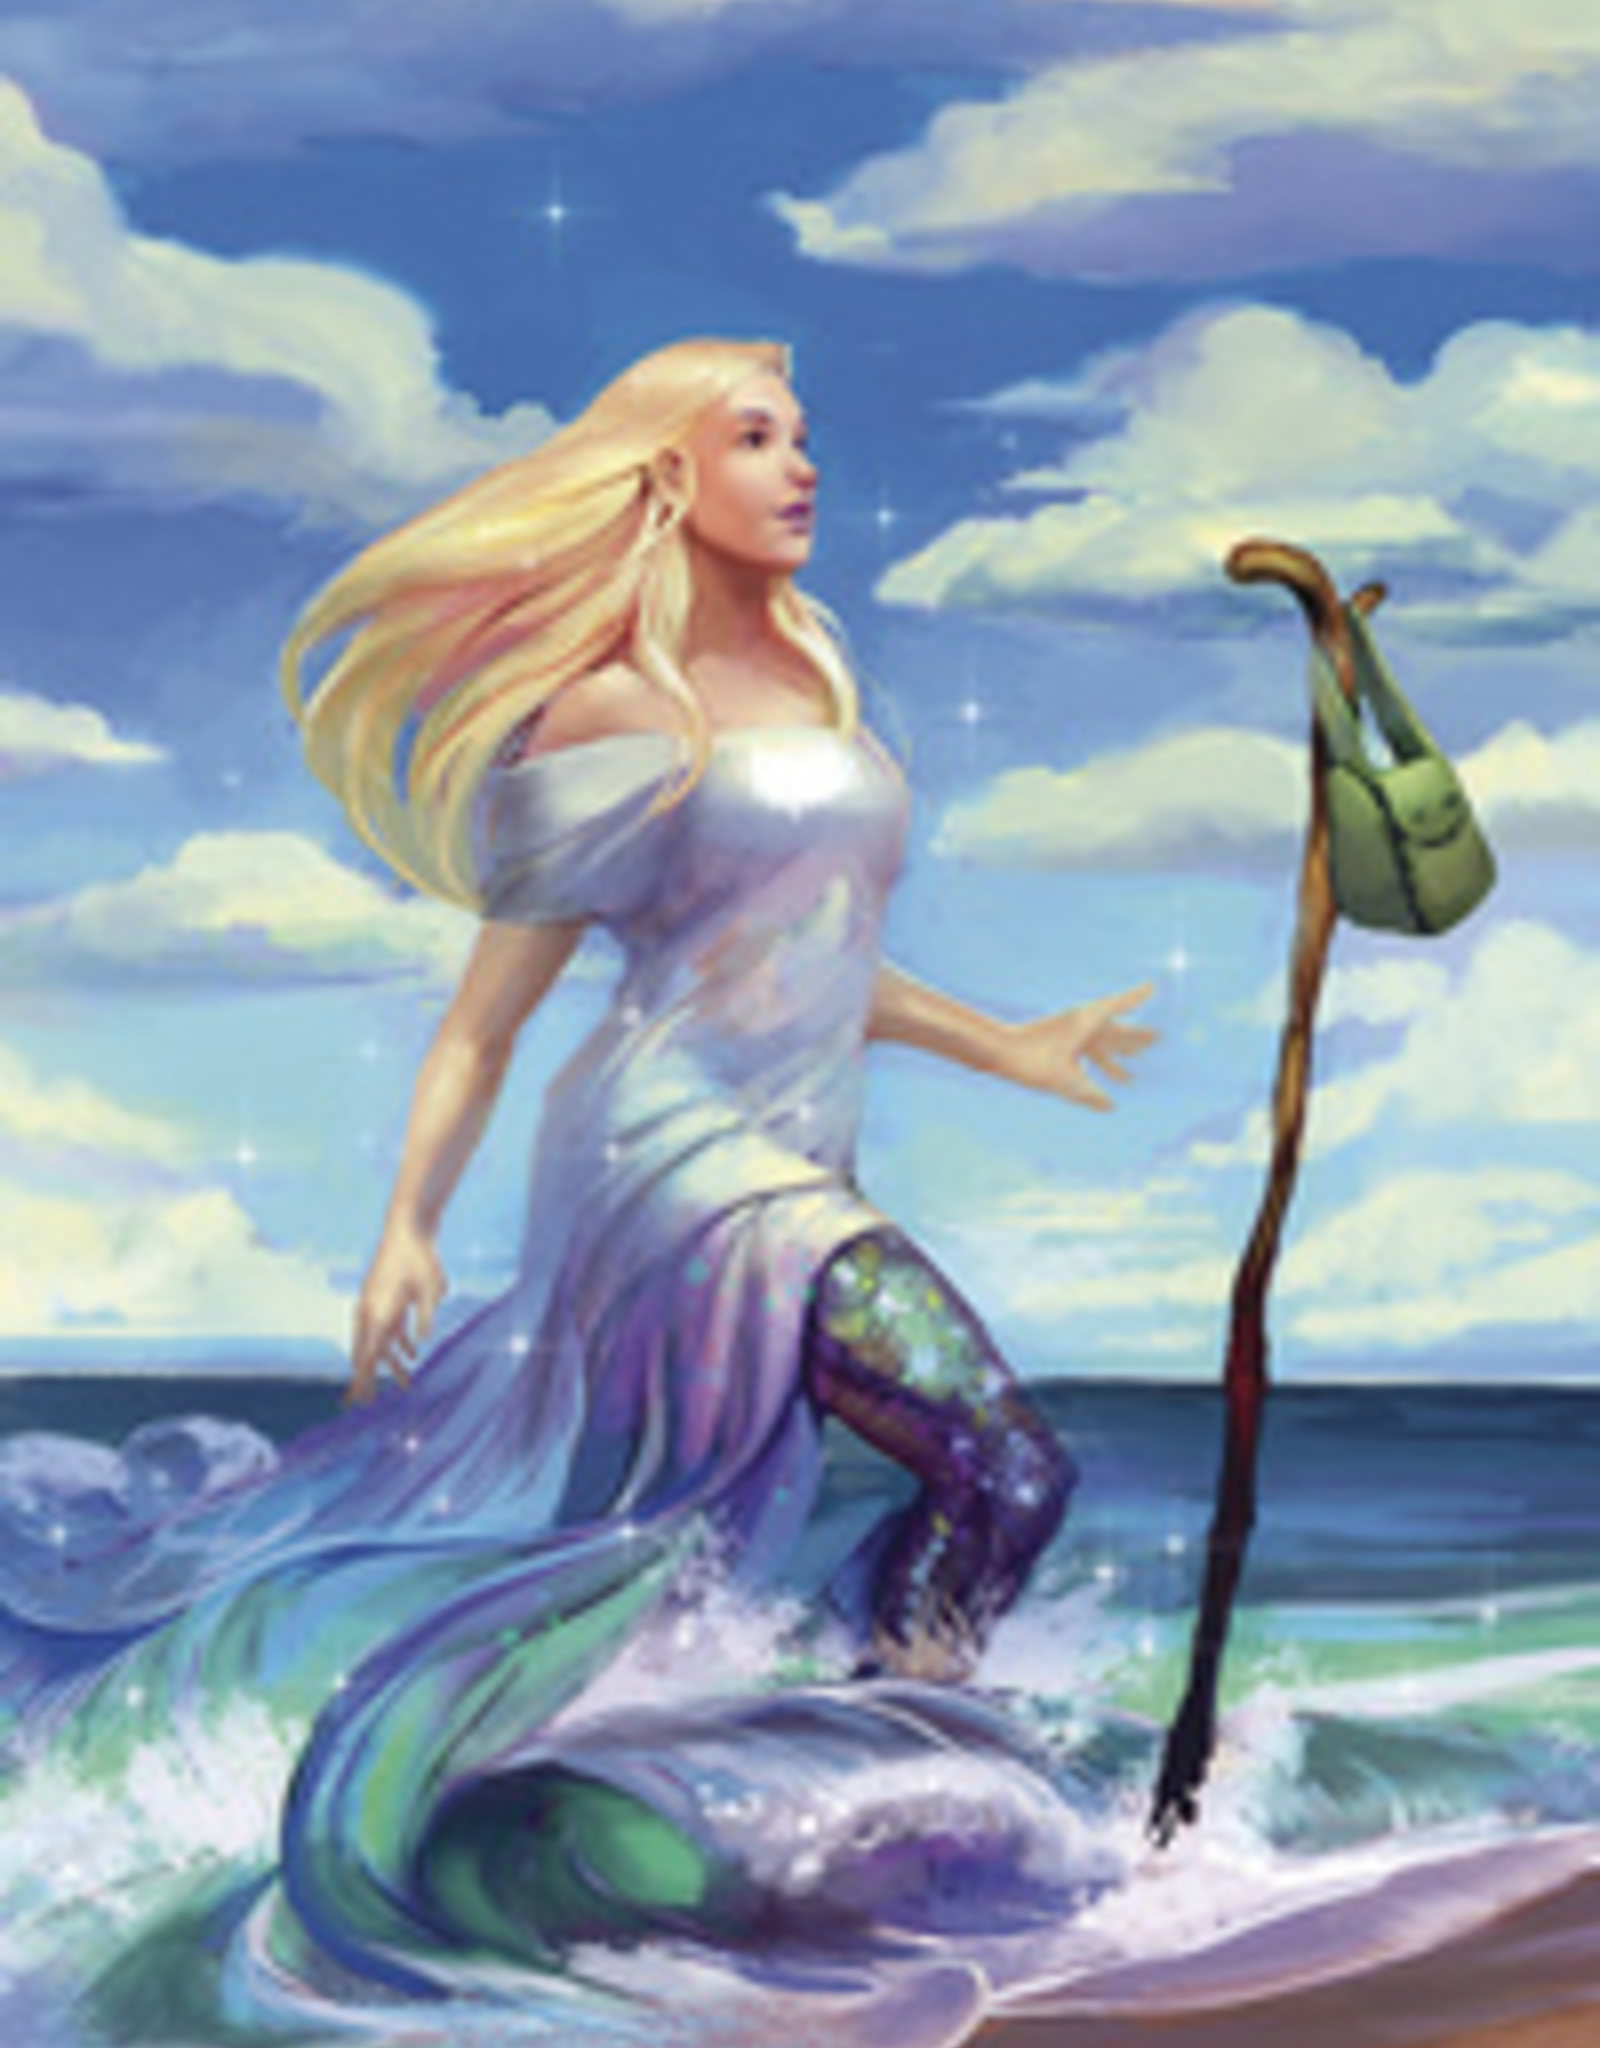 Llewelyn Mermaid Tarot